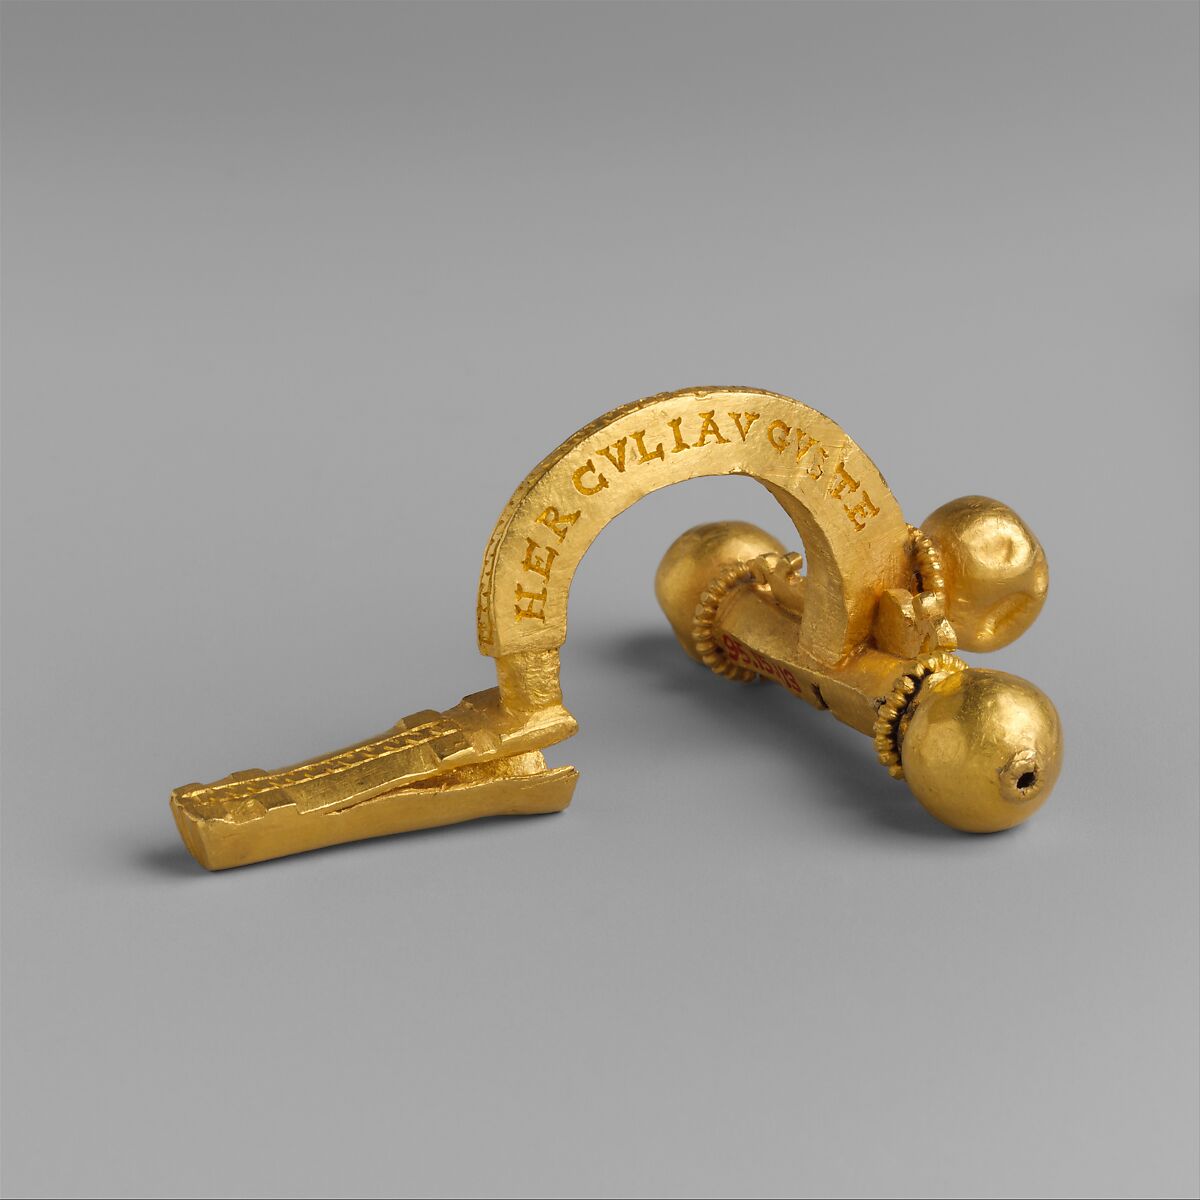 Gold crossbow fibula (brooch), Gold, Roman 